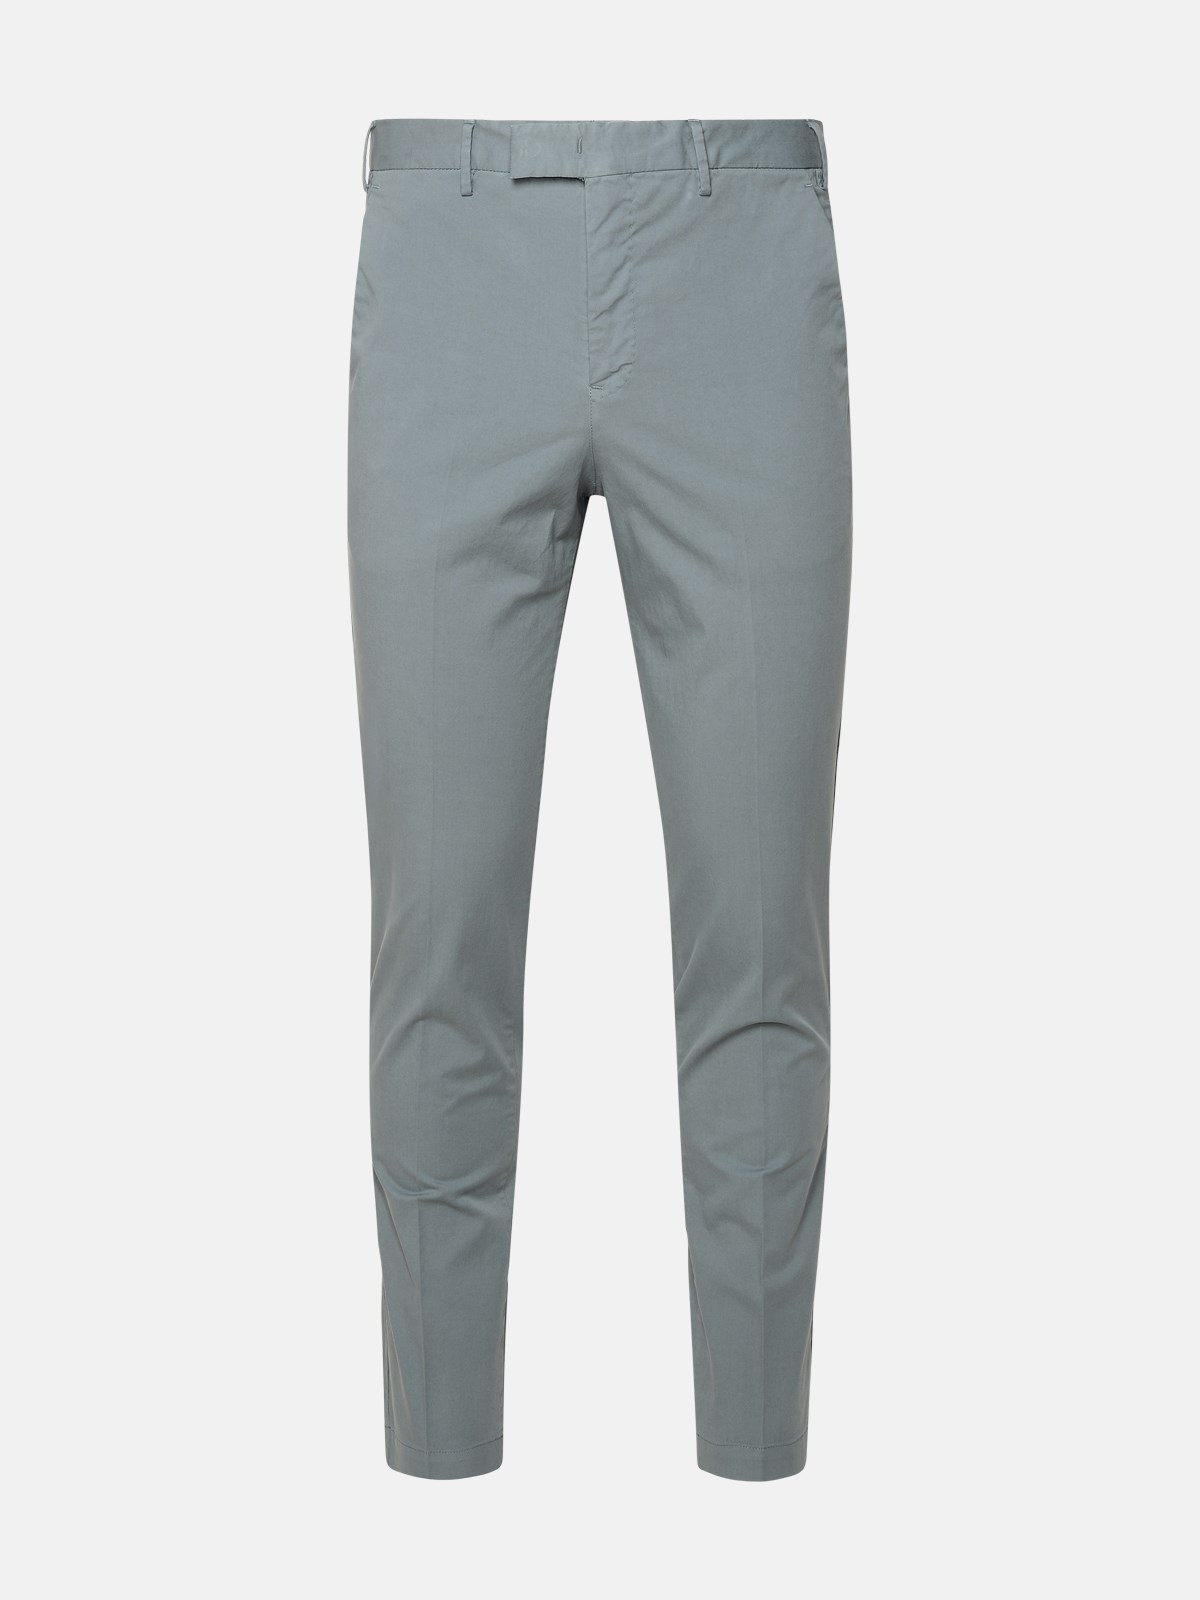 Shop Pt Torino Grey Cotton Blend Trousers